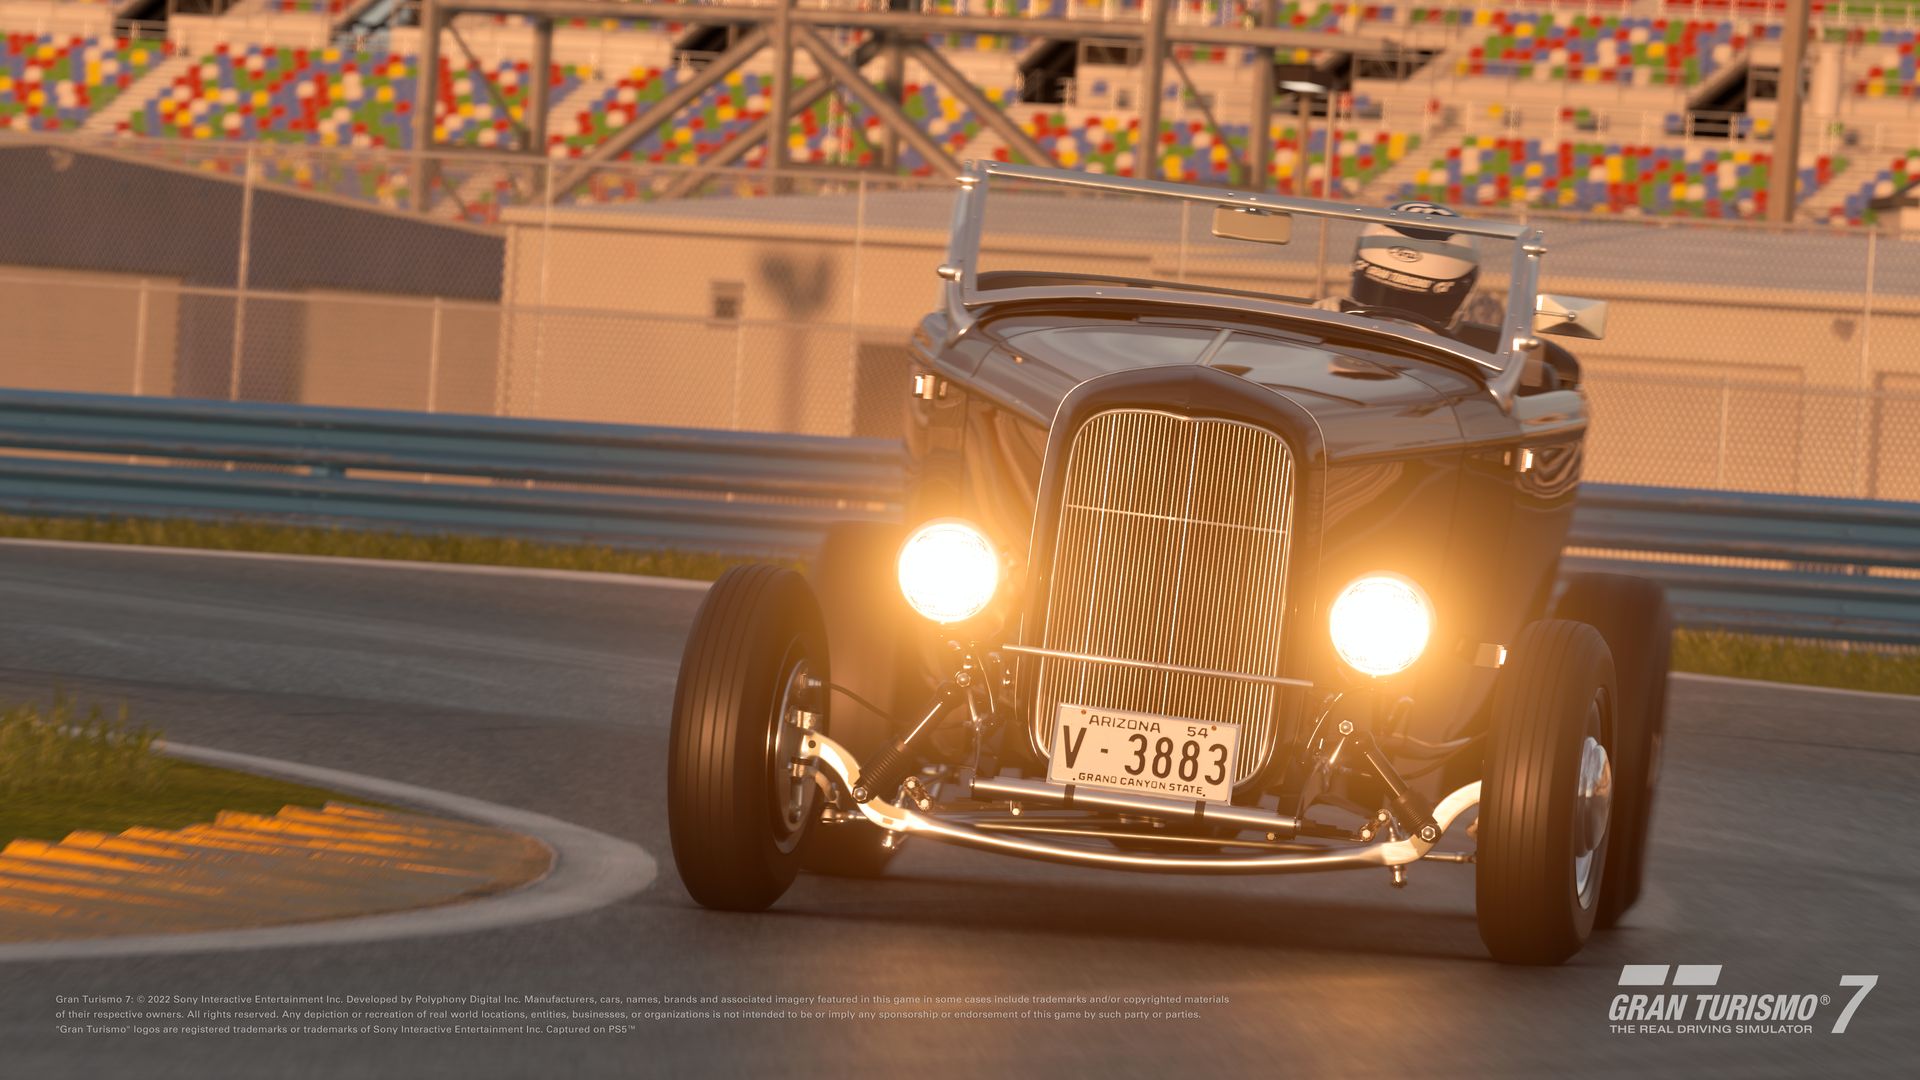 Gran Turismo 7 Update 1.17 Now Available, Adds Watkins Glen